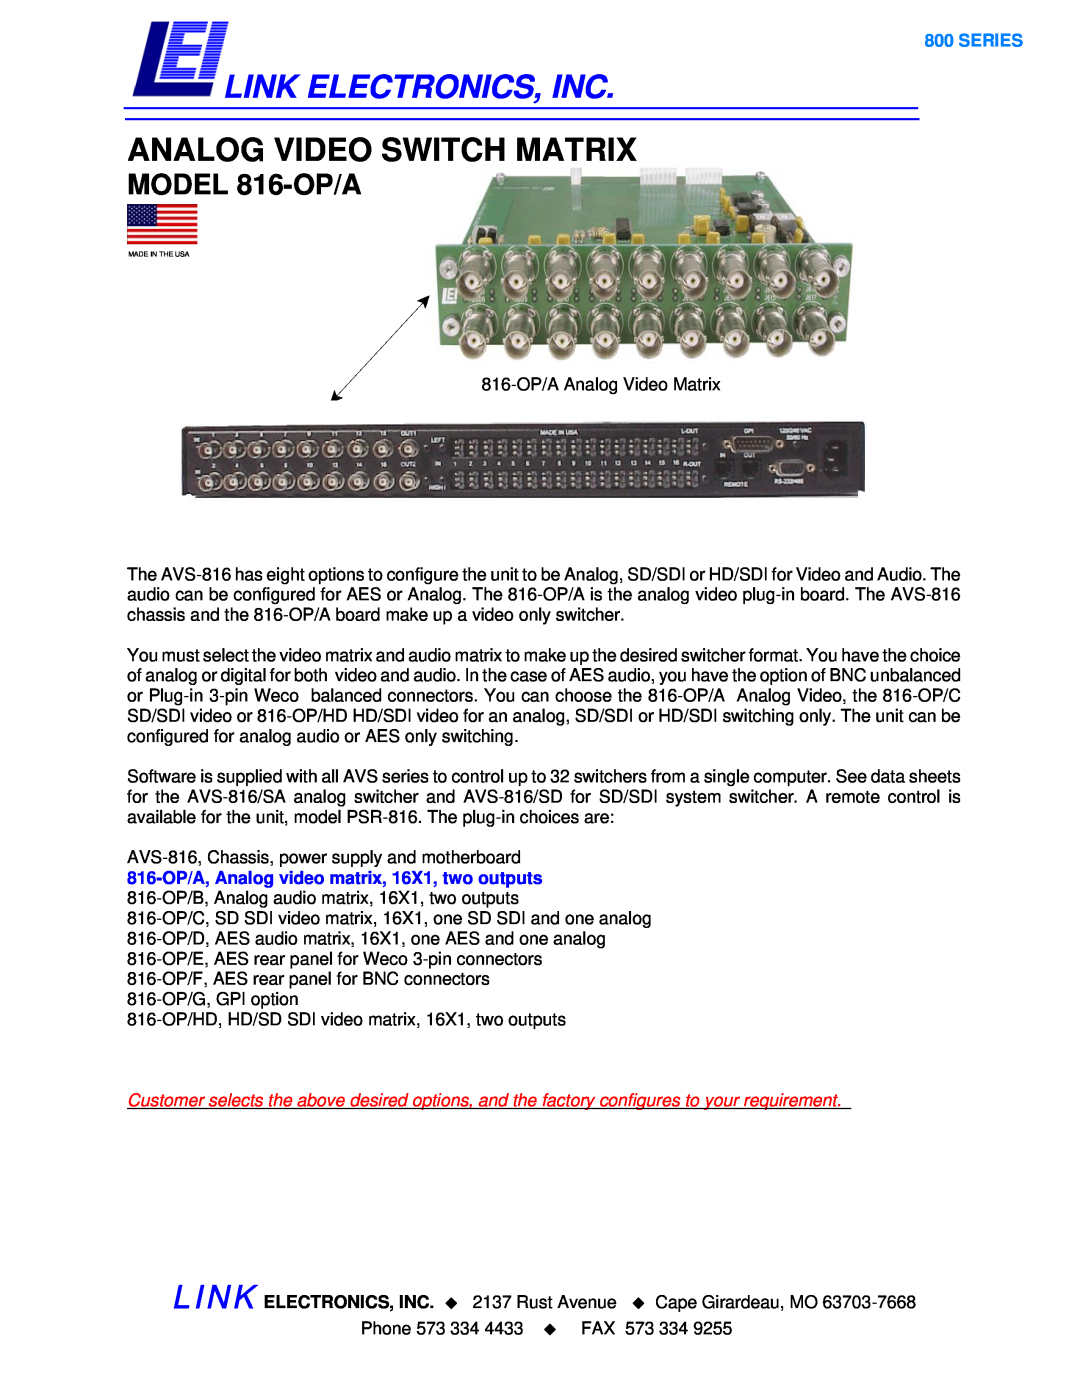 Link electronic manual 816-OP/A, Analog video matrix, 16X1, two outputs, Link Electronics, Inc, MODEL 816-OP/A, Series 